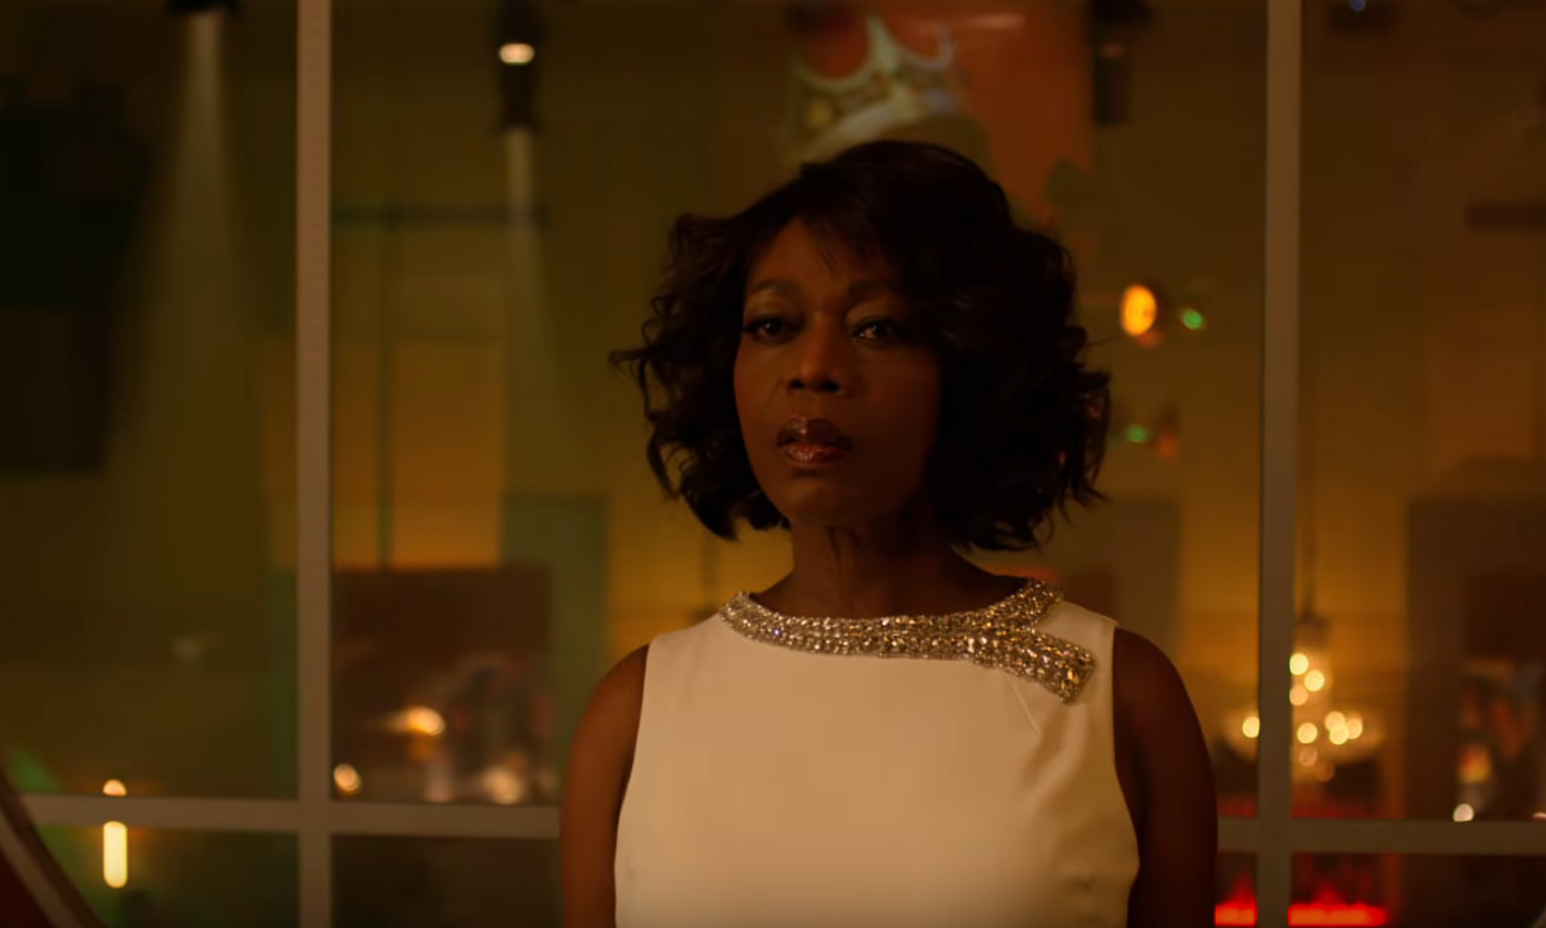 Black Women Take Center Stage In New 'Luke Cage' Trailer
